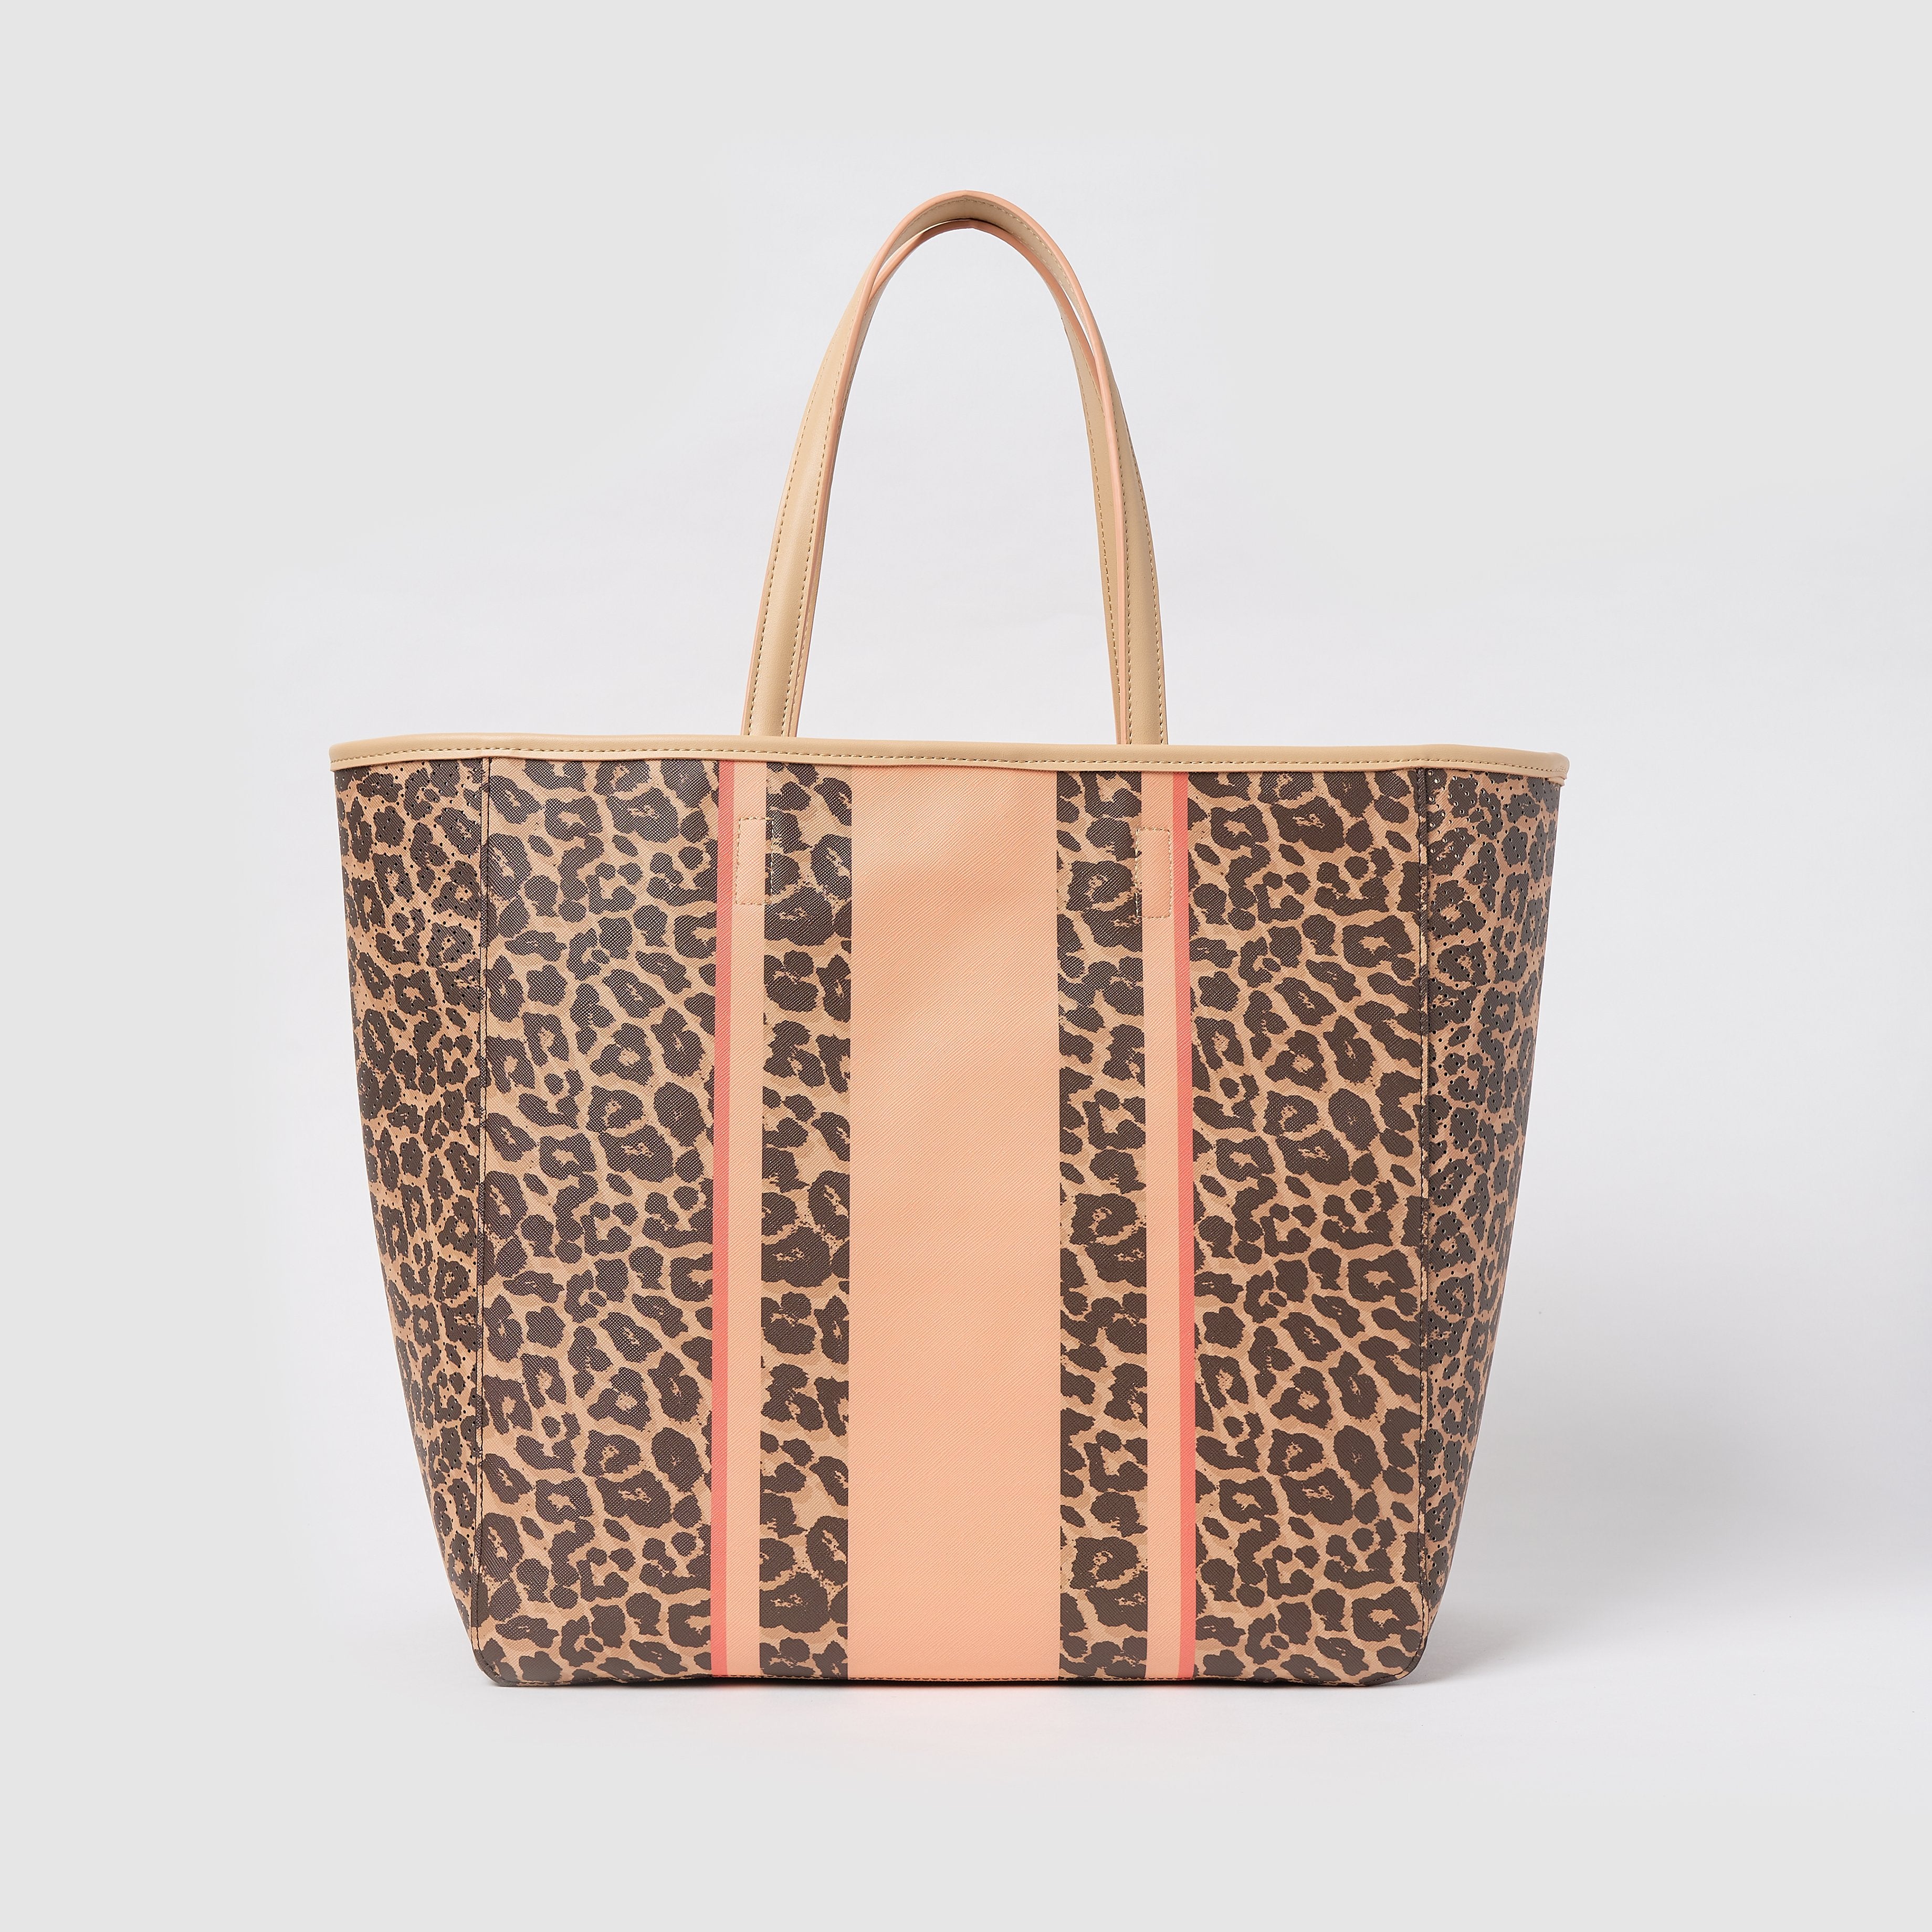 Leopard Print Tote Bag /leopard Print Leather Bag / Leopard 